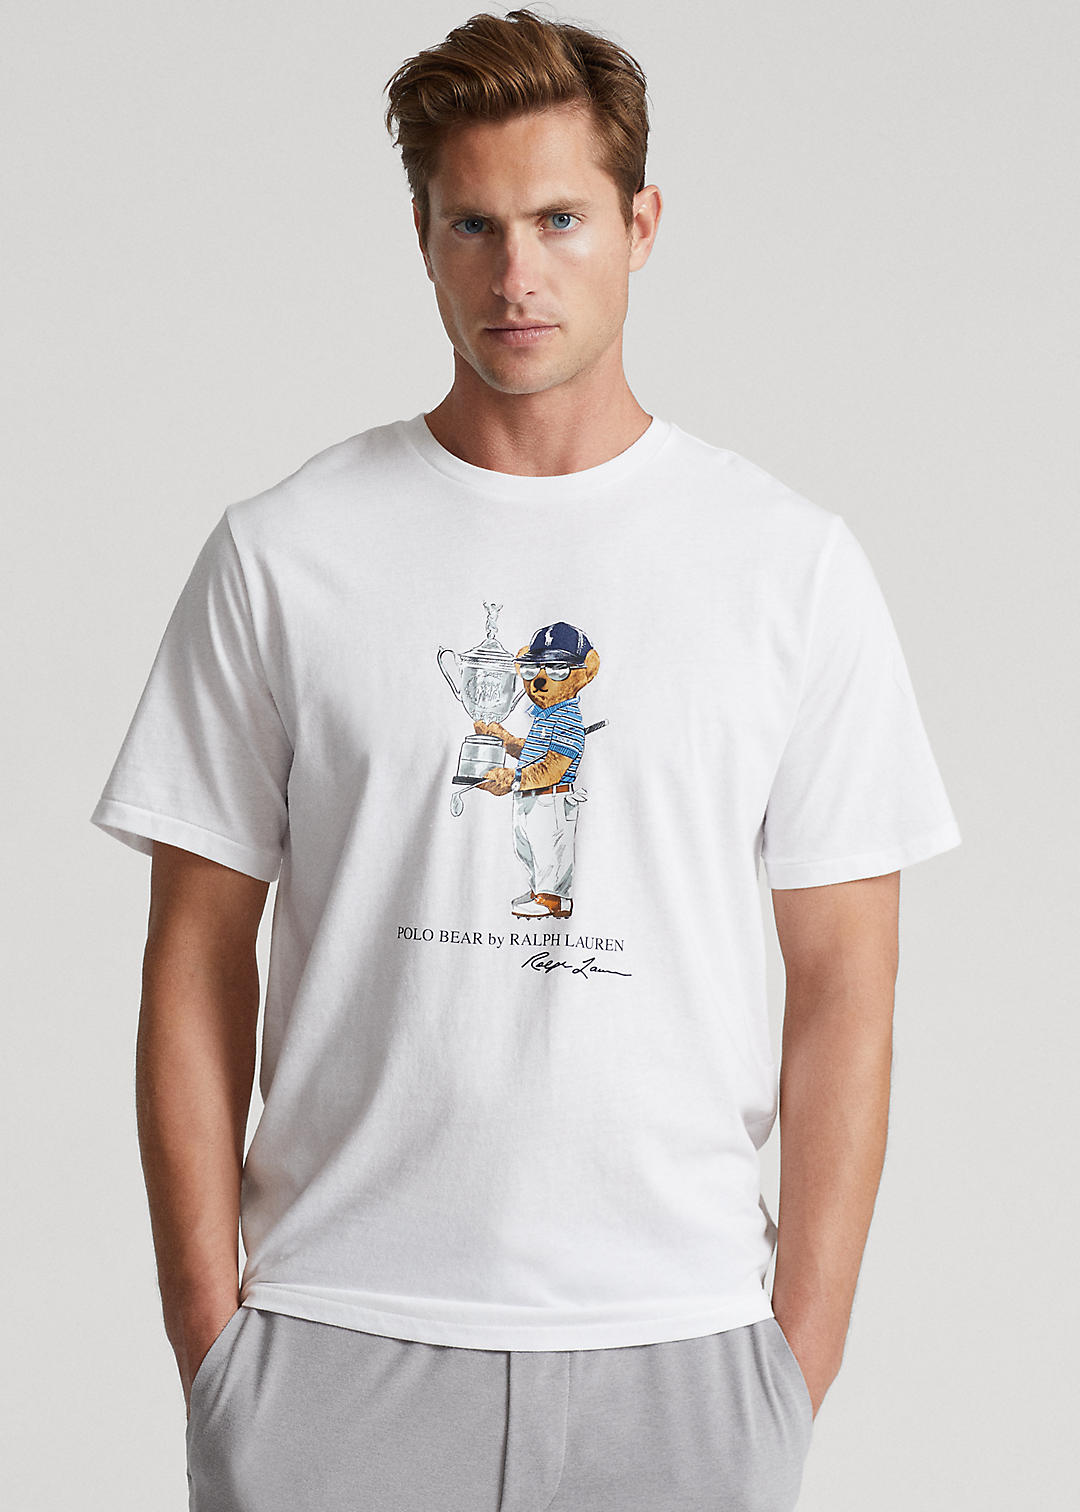 U.S. Open Classic Fit Polo Bear T-Shirt